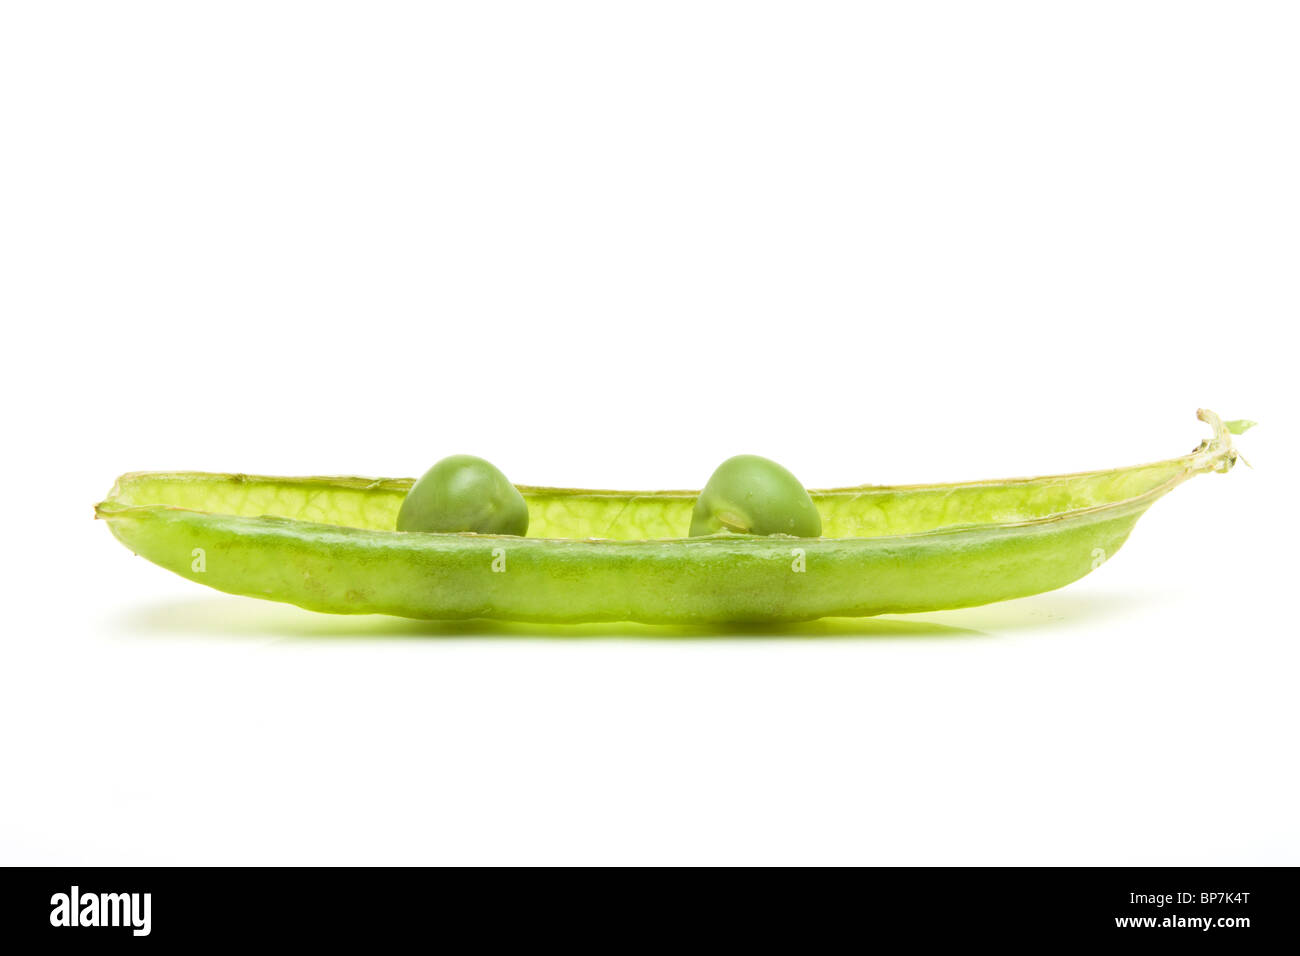 Two peas in a pod conceptual image. Stock Photo